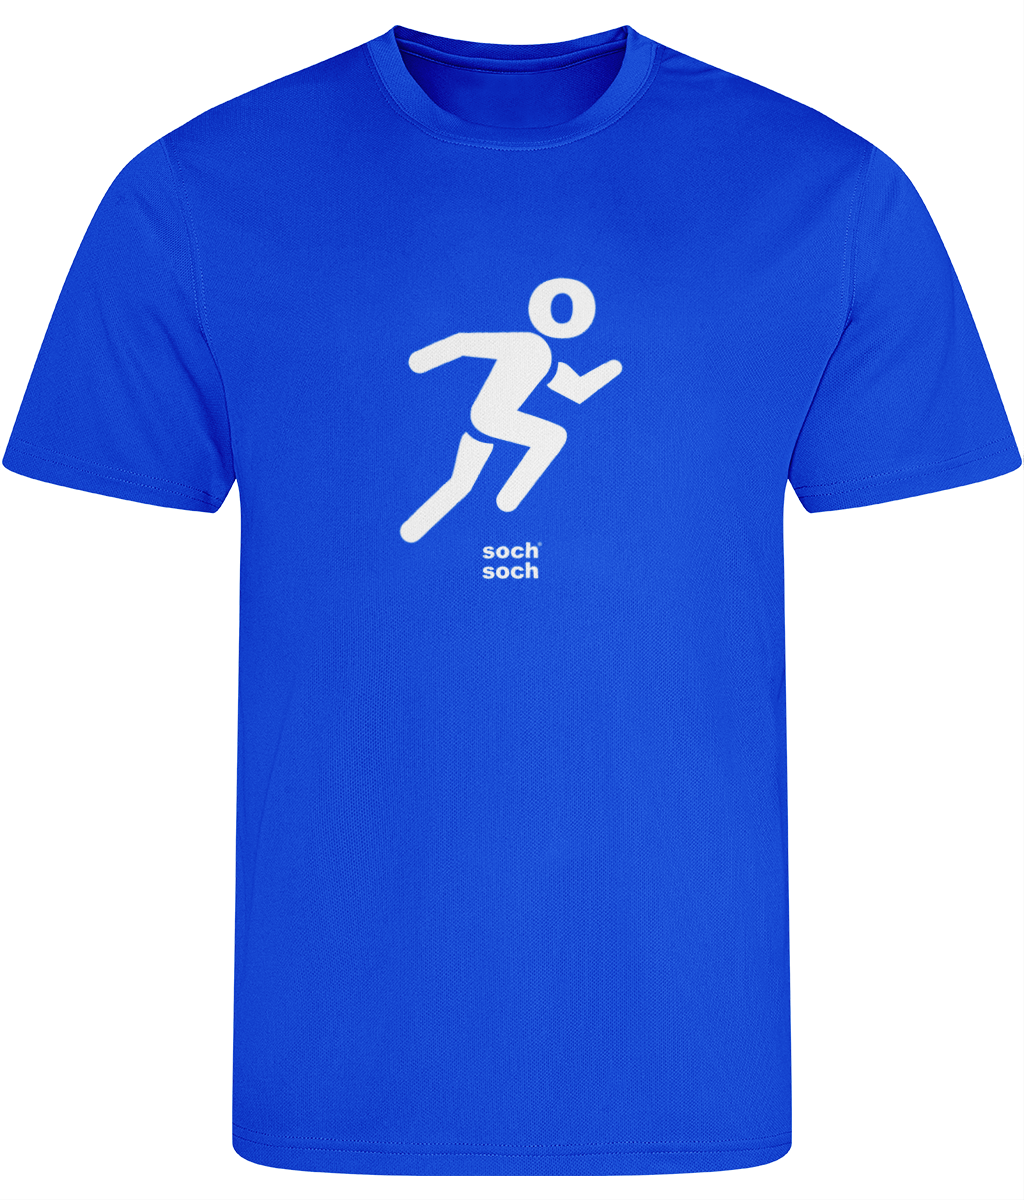 Men's Performance Running T-shirt